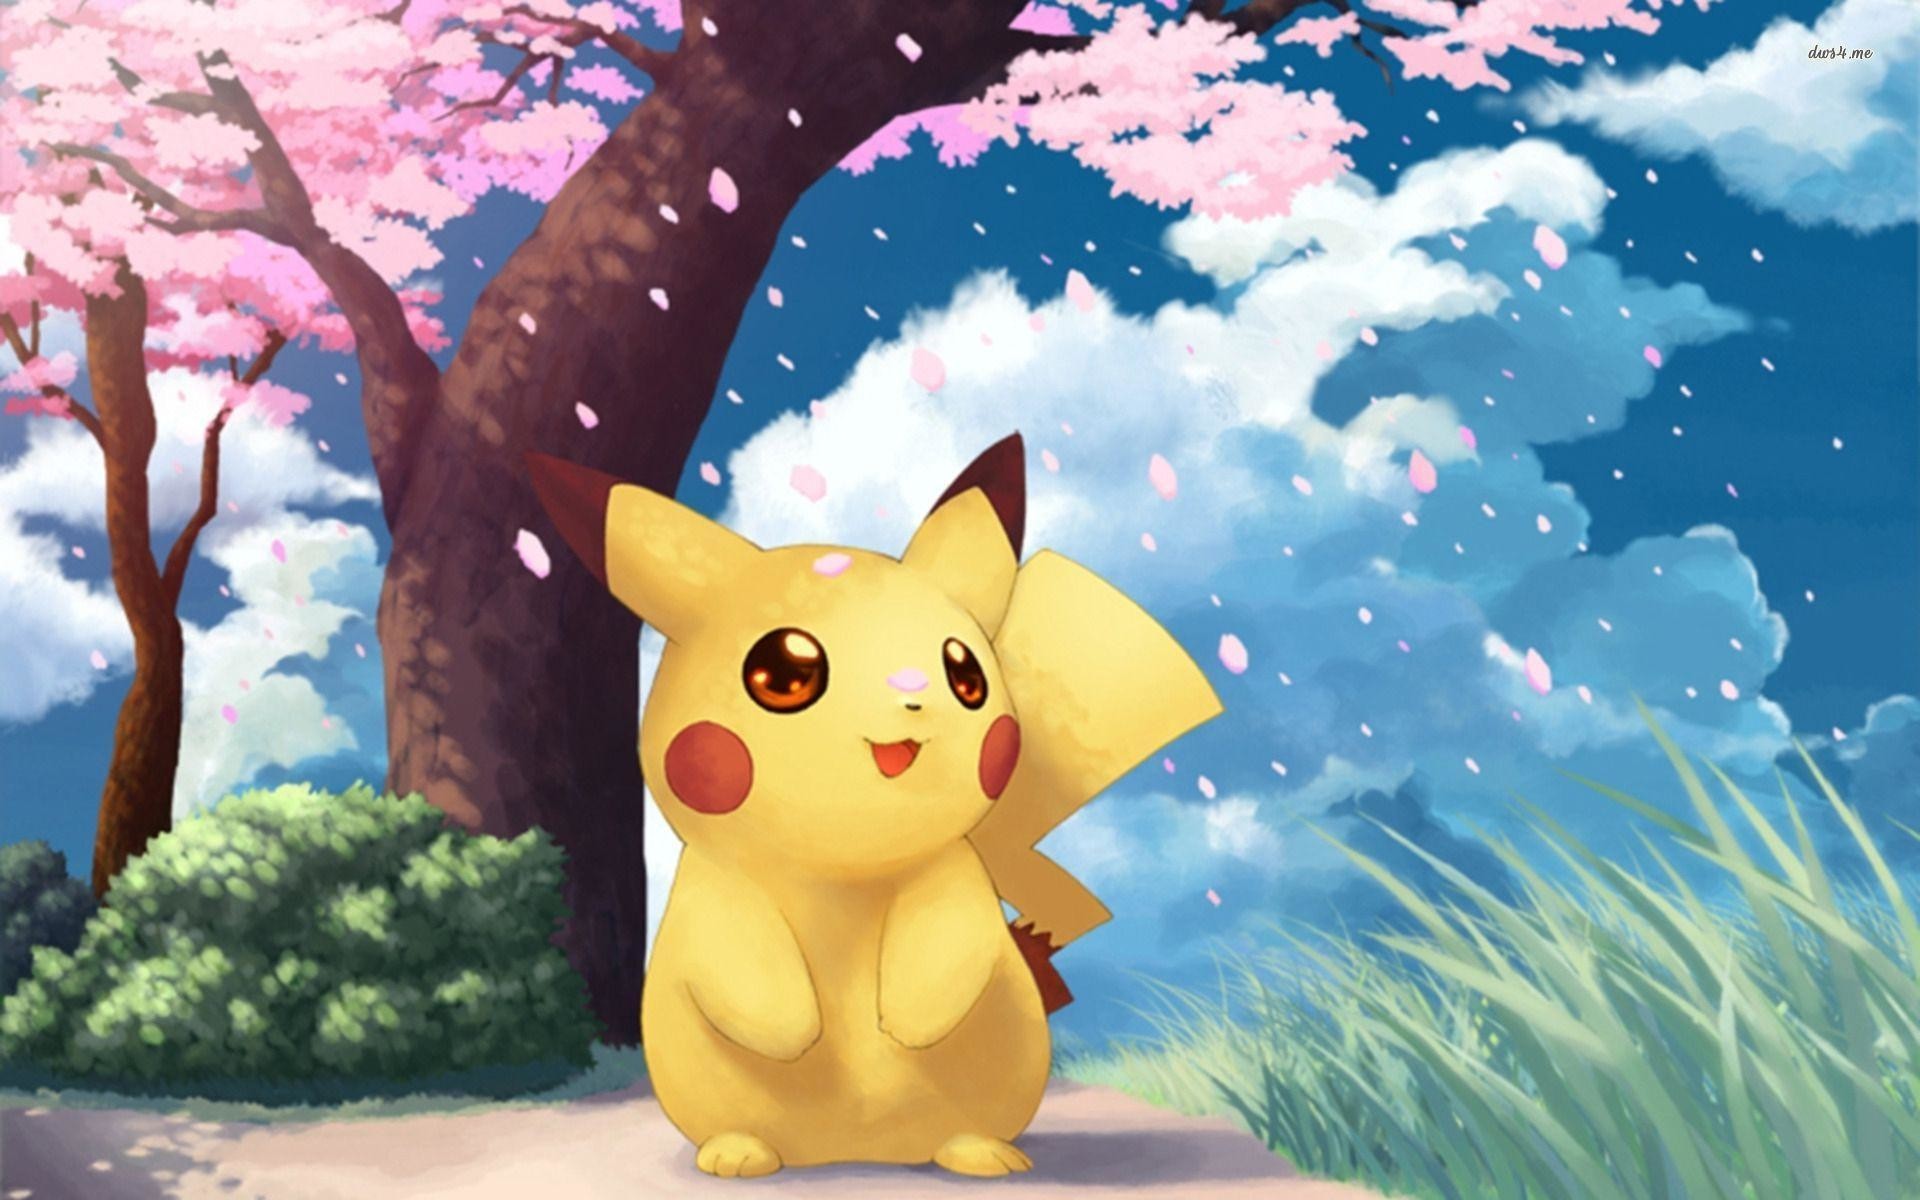 1920x1200 Most Downloaded Pokemon Pikachu Wallpapers - Full HD wallpaper search